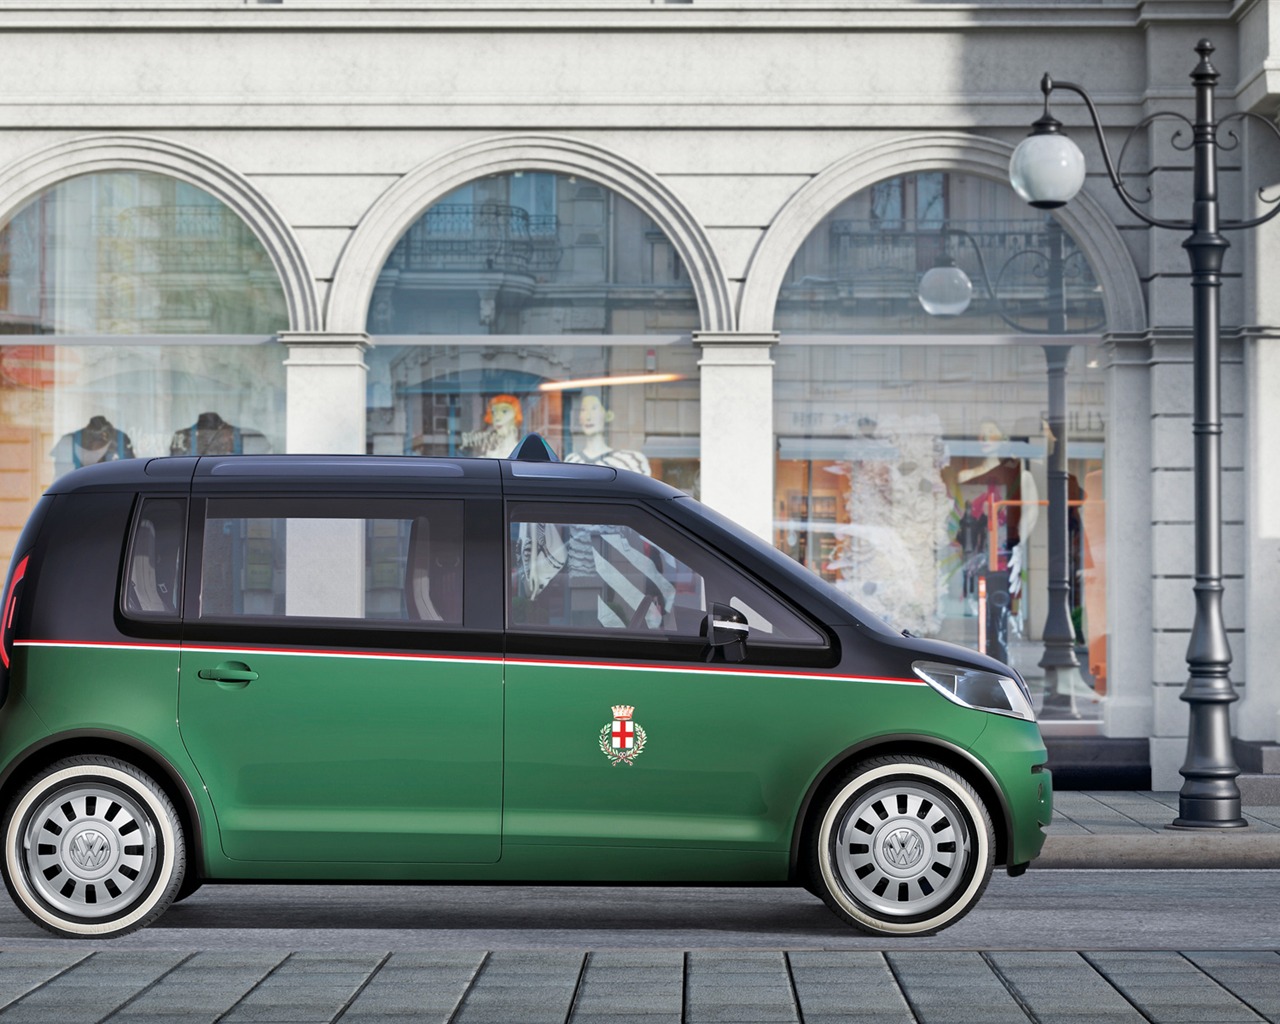 Concept Car Volkswagen Milano Taxi - 2010 大眾 #6 - 1280x1024